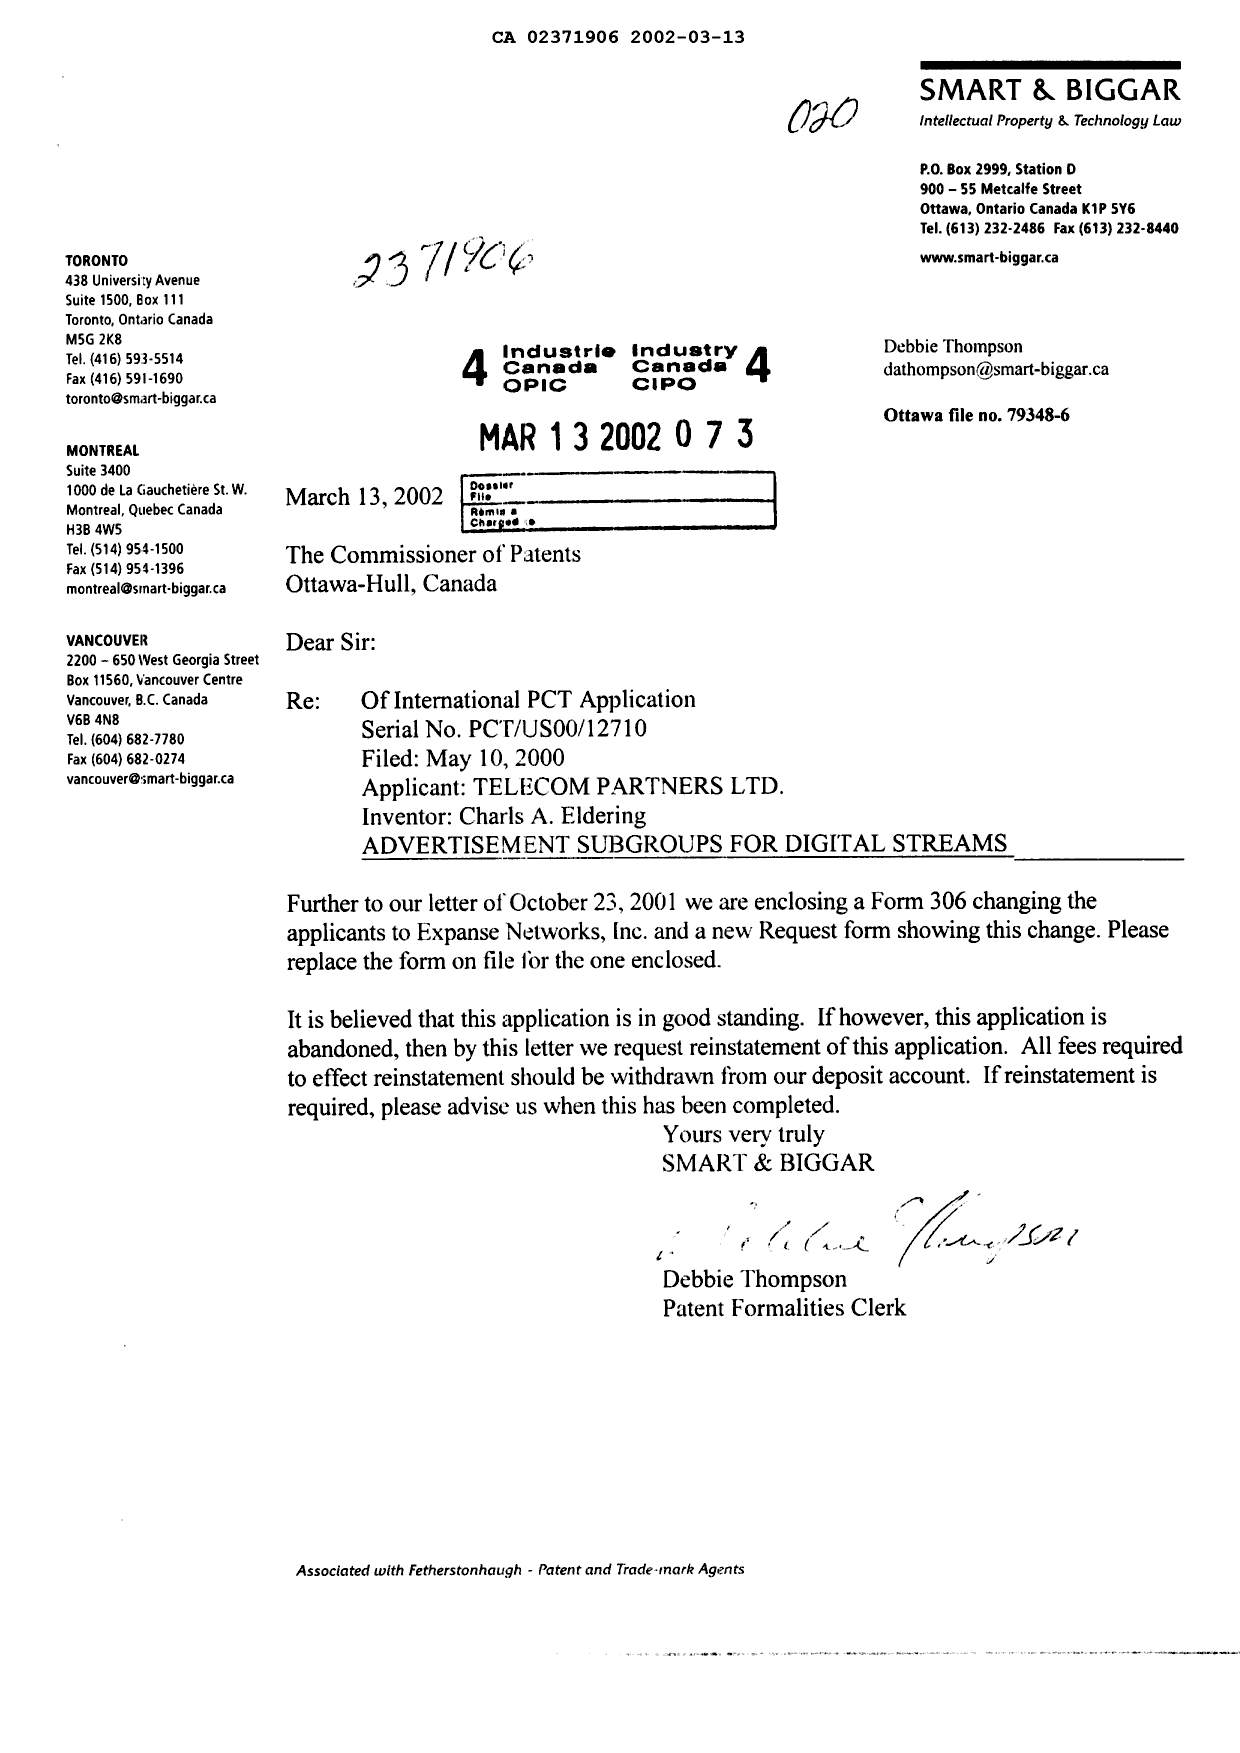 Canadian Patent Document 2371906. Correspondence 20020313. Image 1 of 3